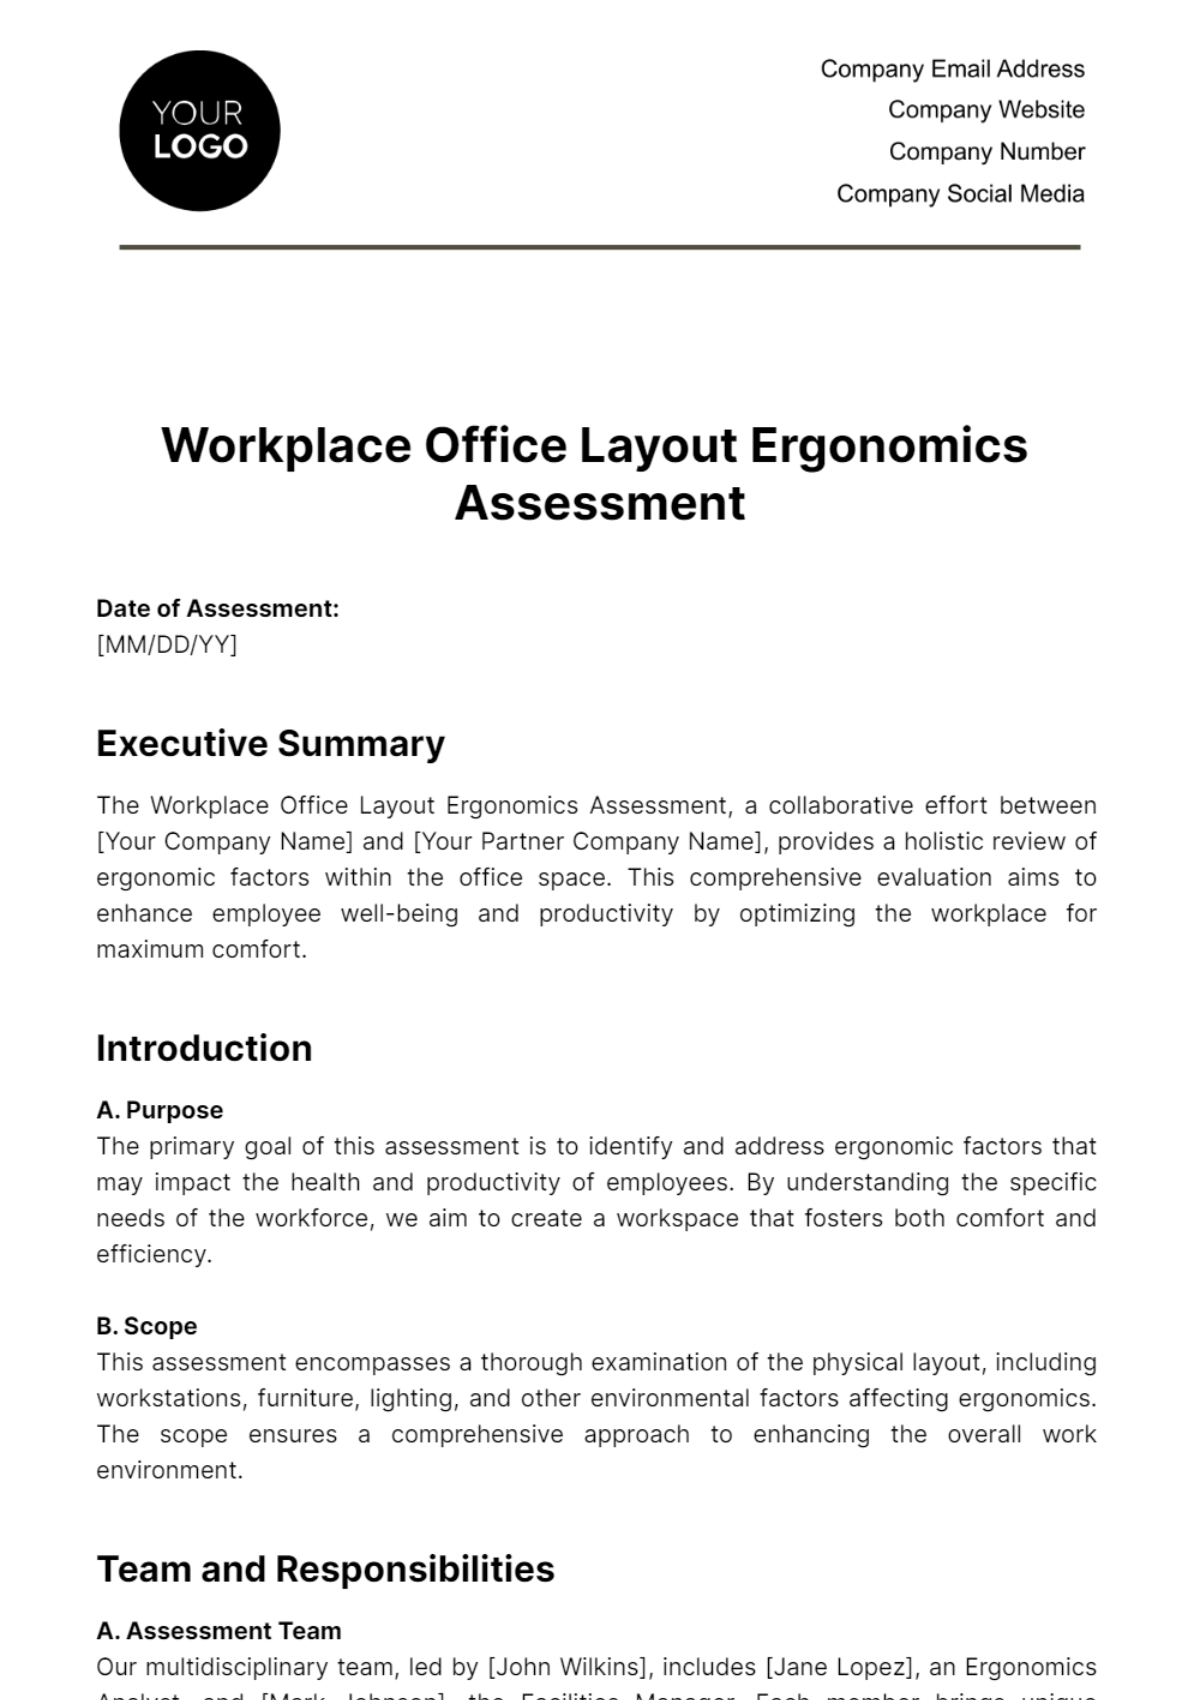 Workplace Office Layout Ergonomics Assessment Template